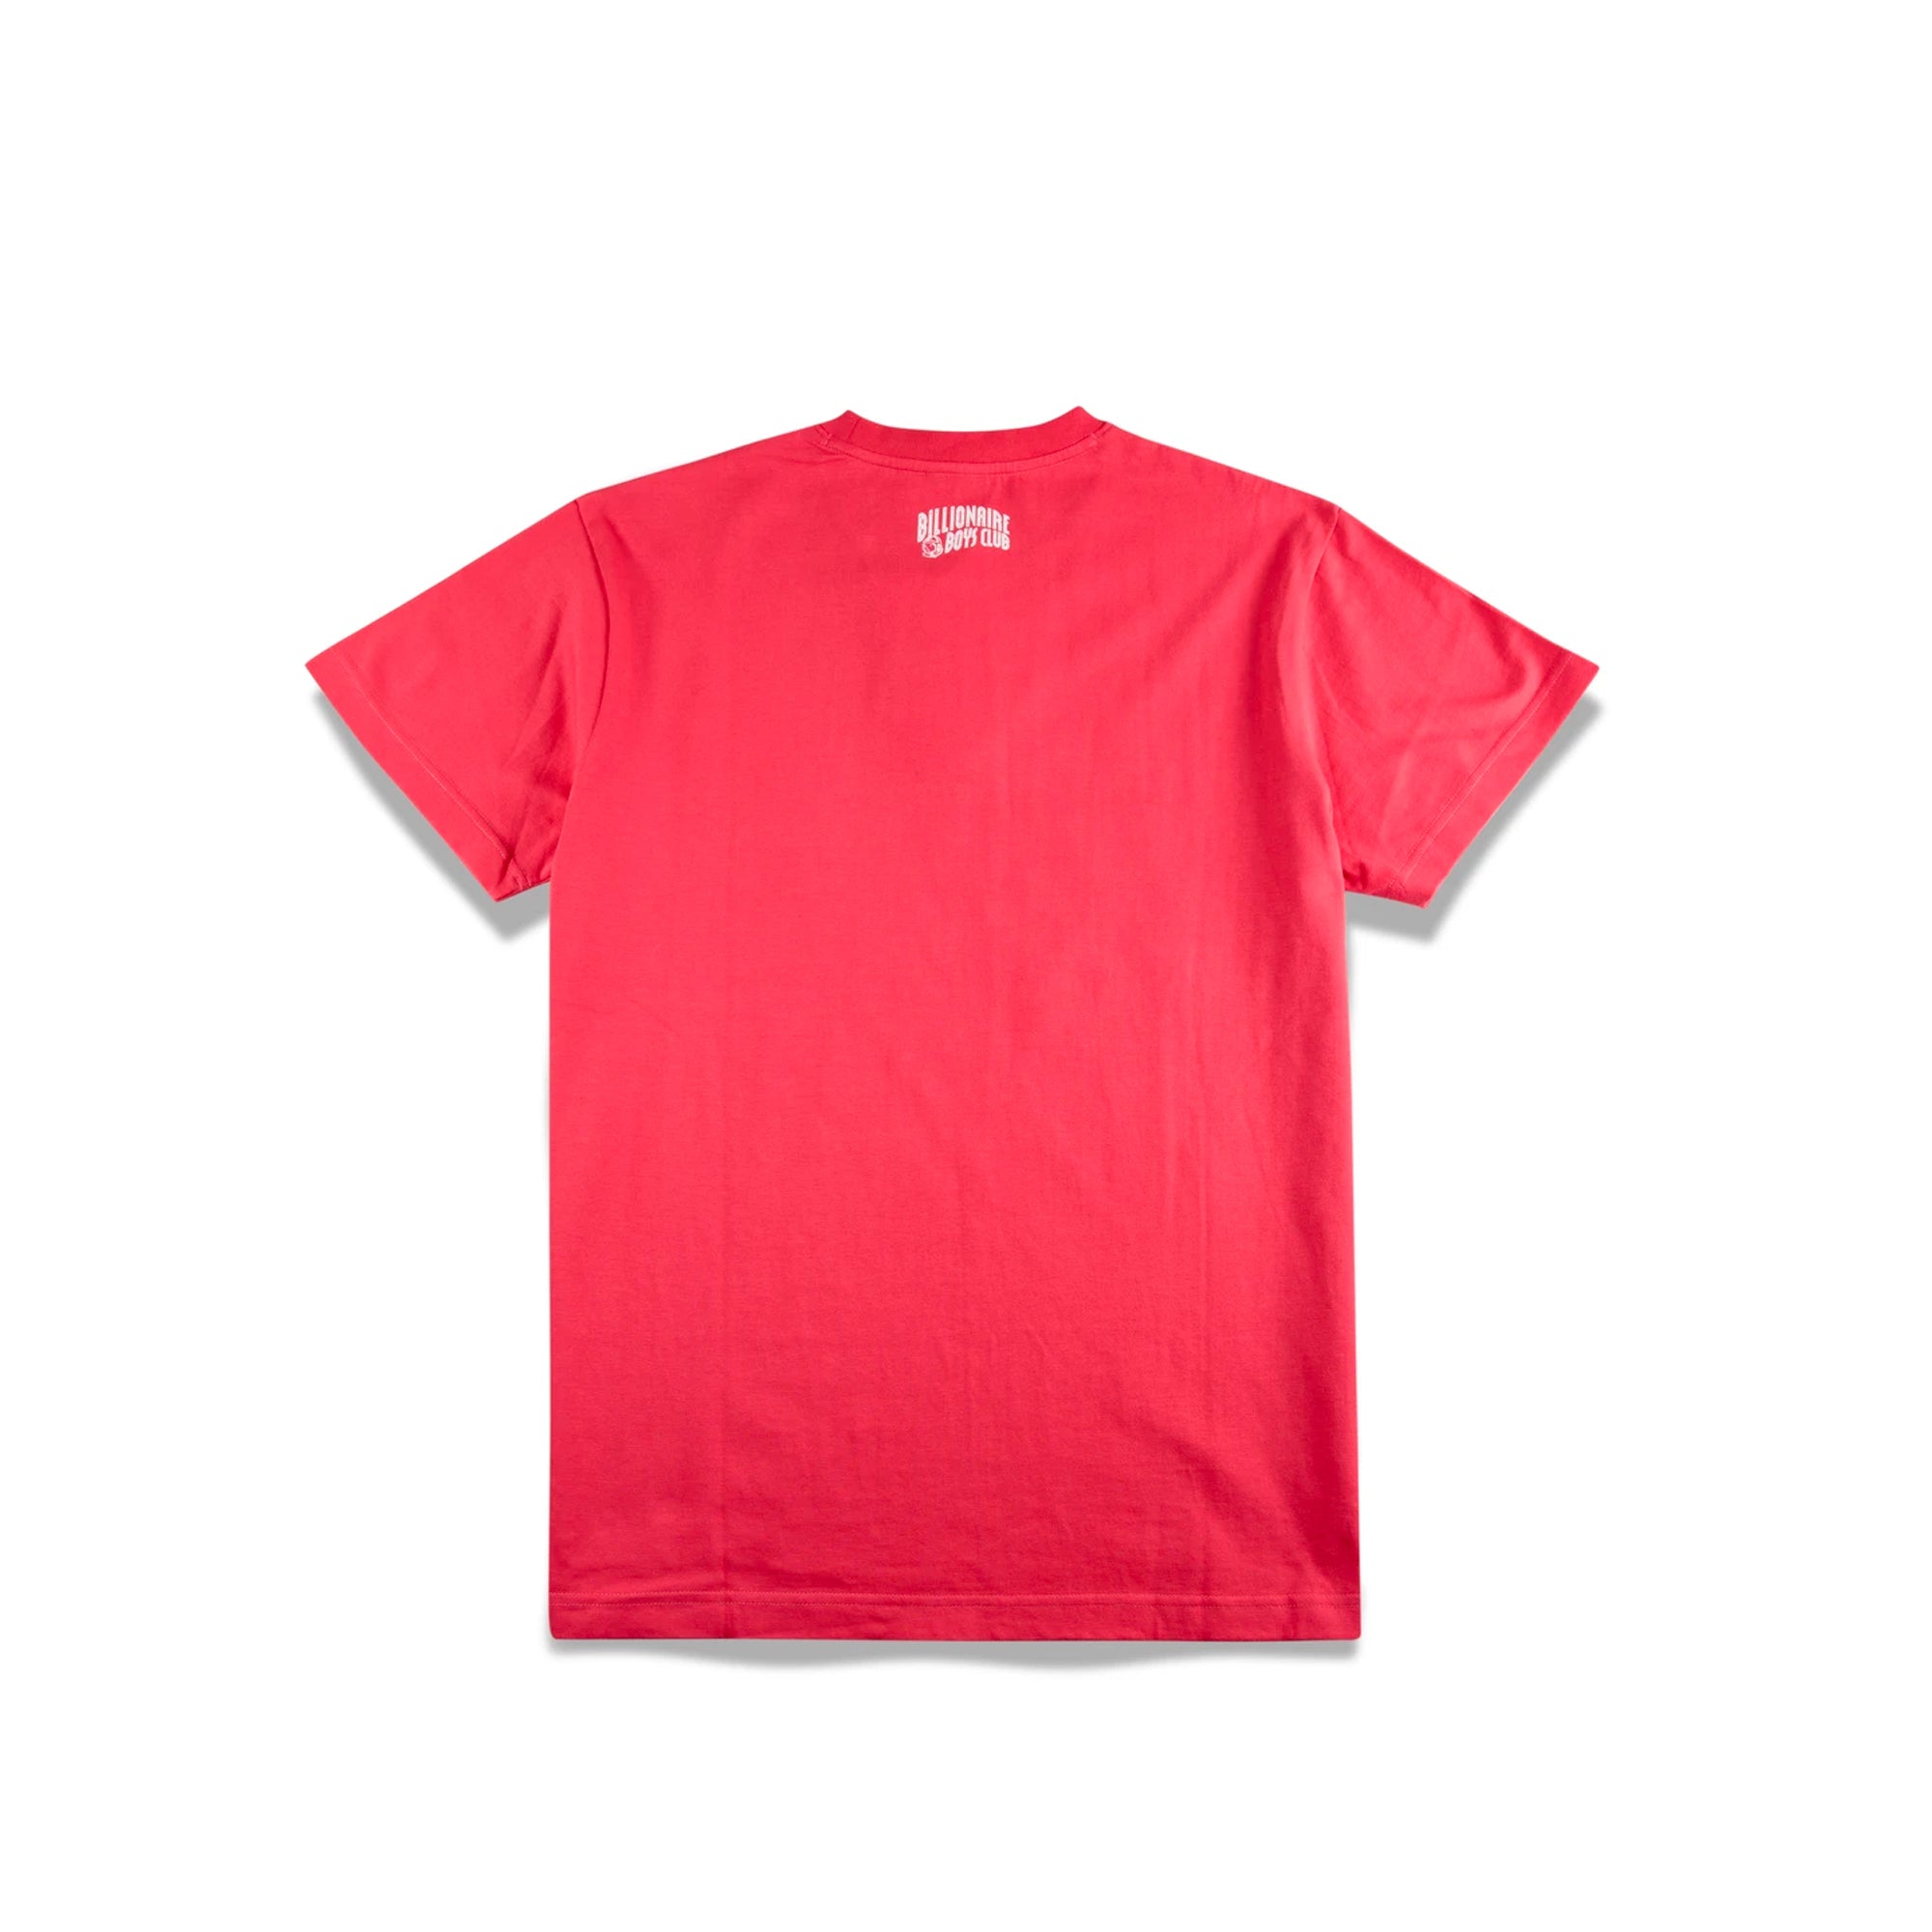 Vandy The Pink Men's T-Shirt - White - XXL